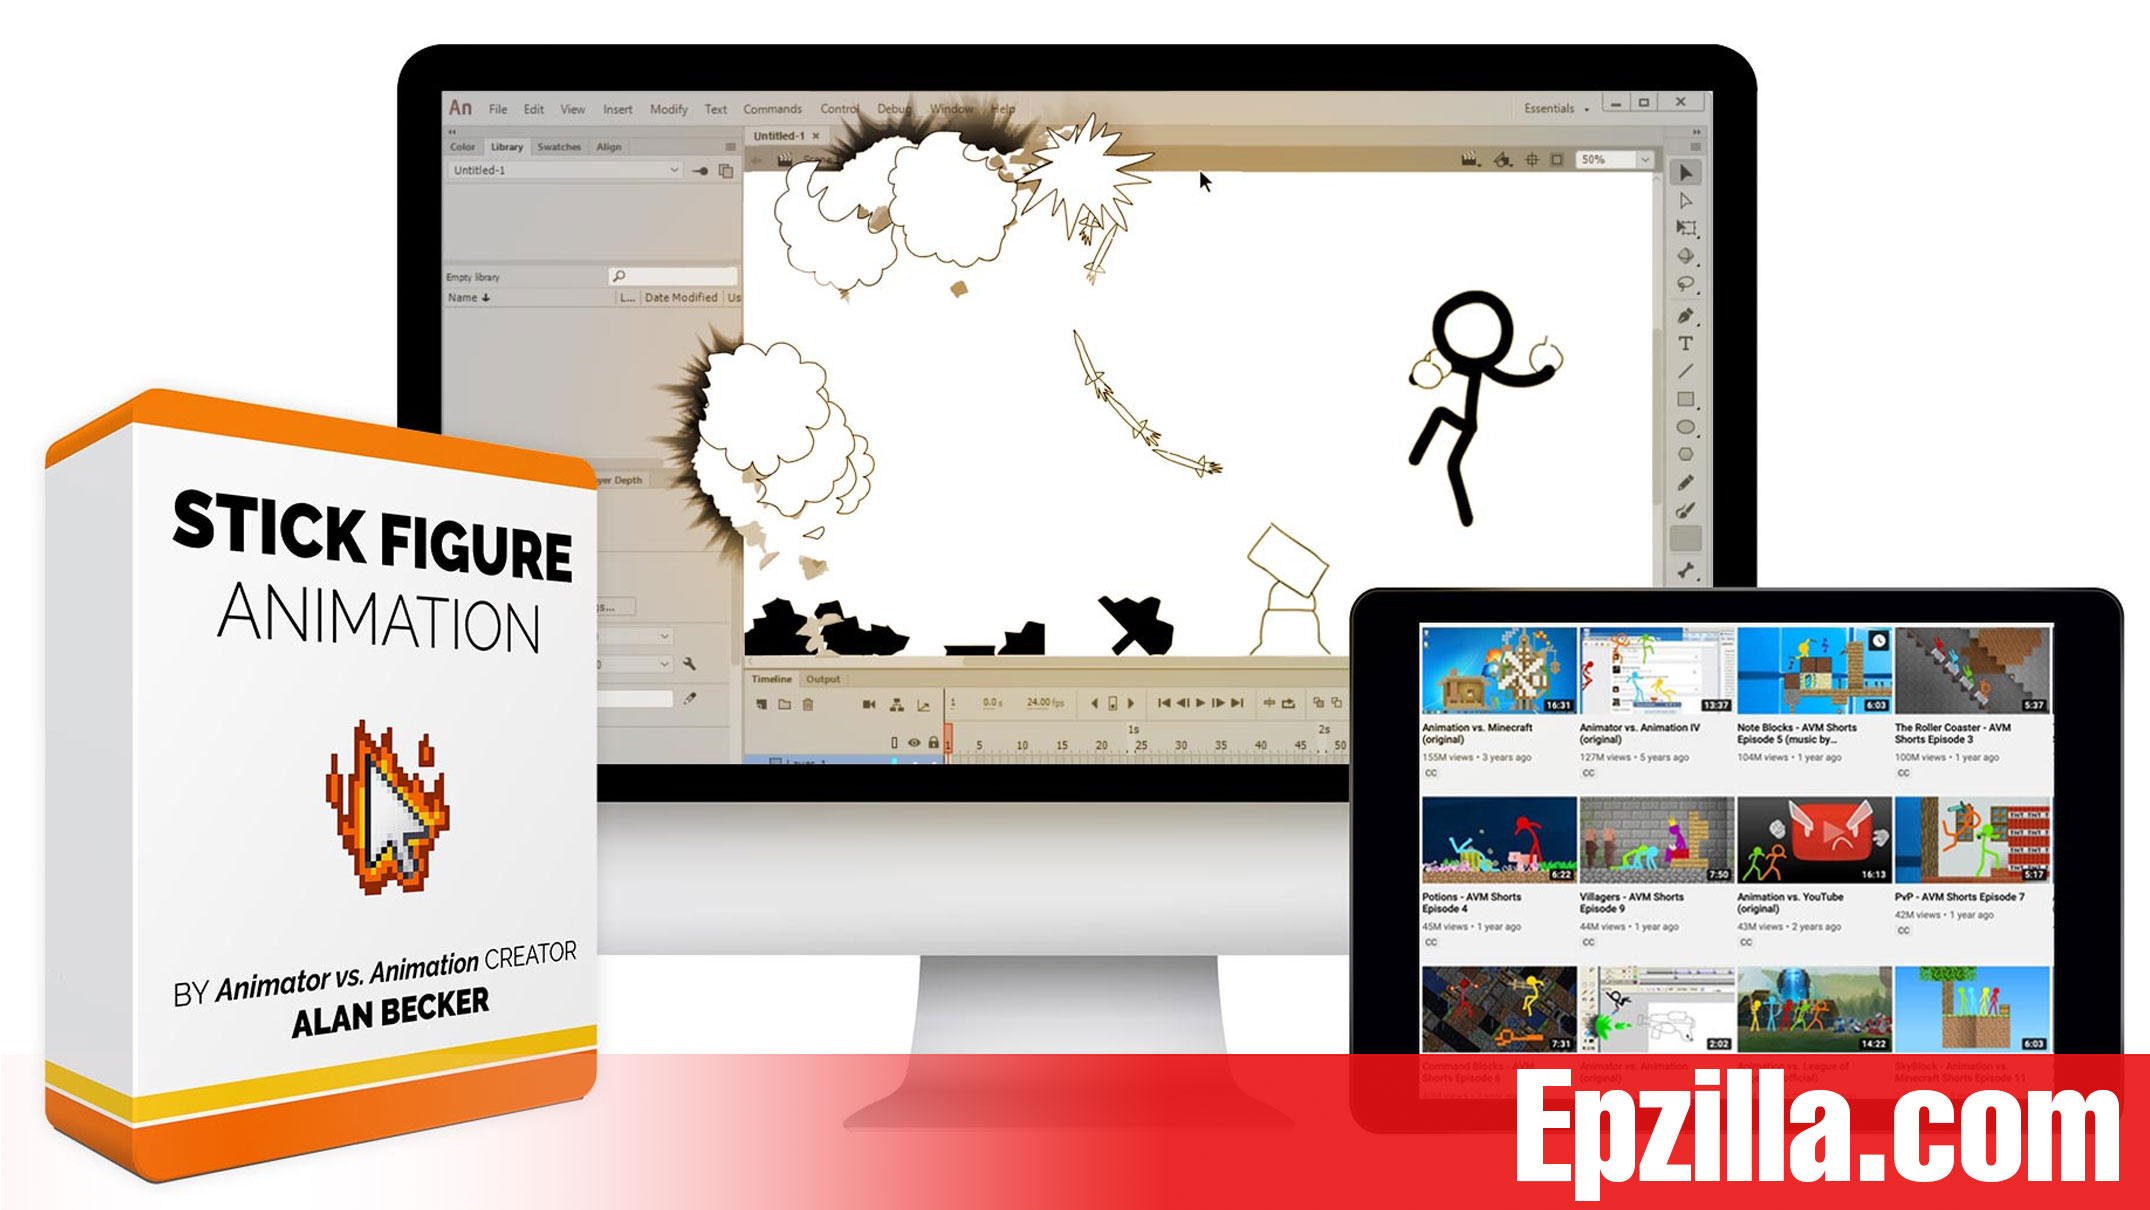 Bloop Animations Stick Figure Animation Free Download Epzilla.com